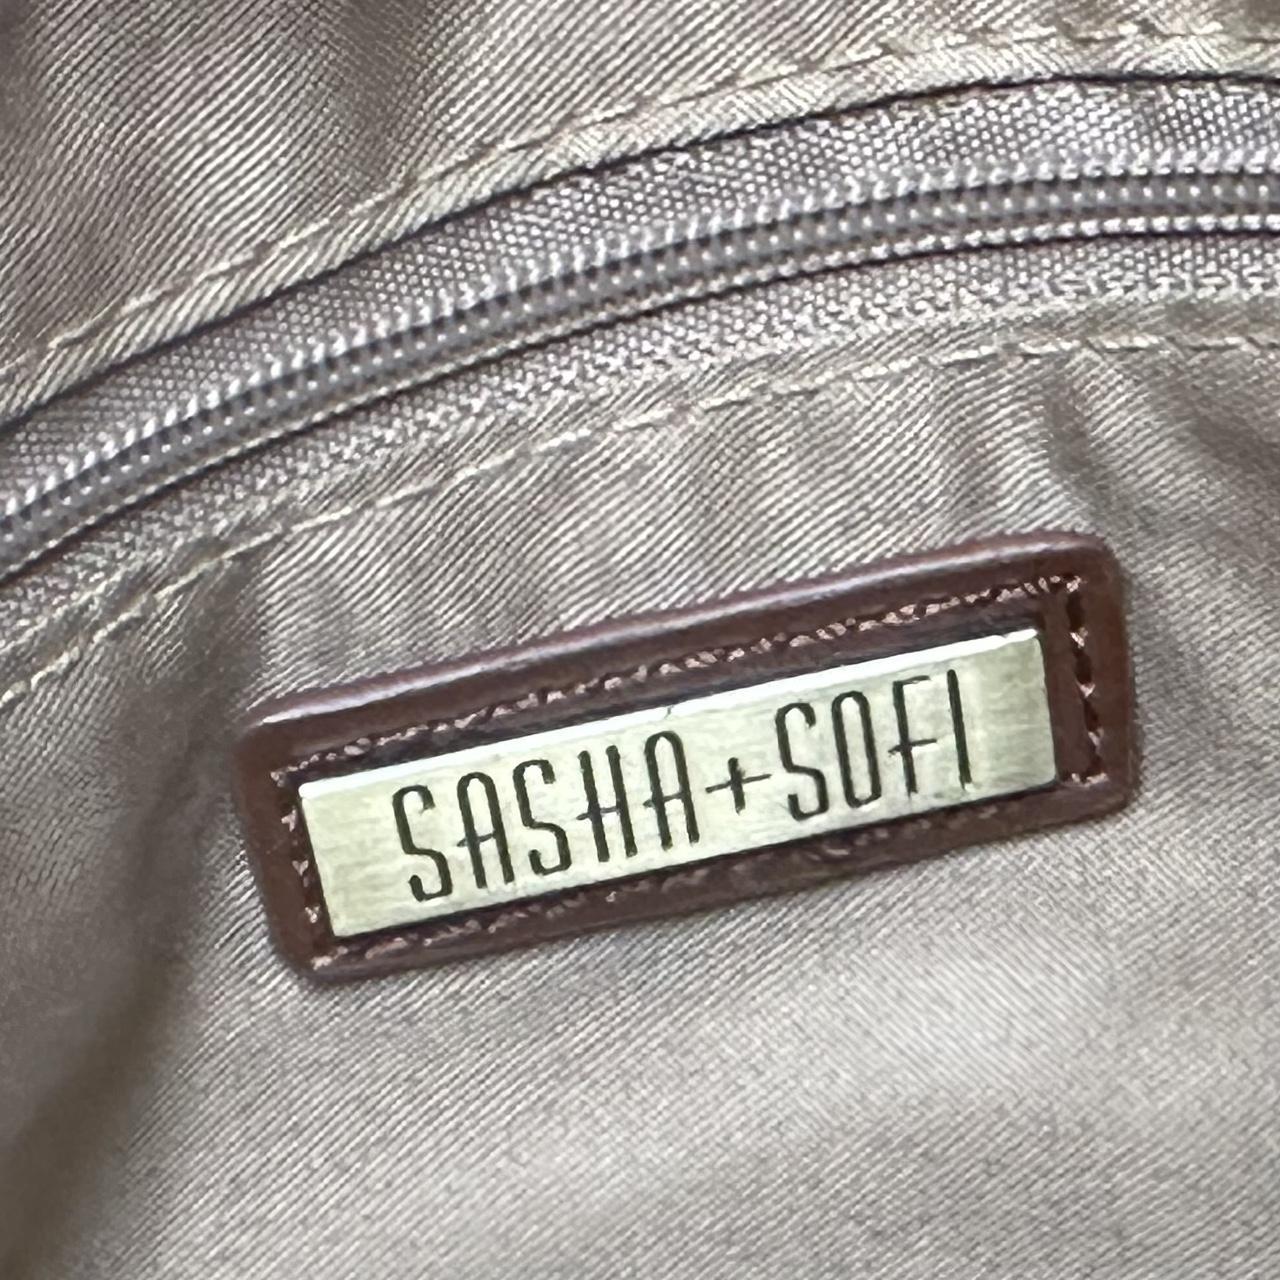 Sasha & Sofi Crossbody Lite Brown Bag offers the - Depop